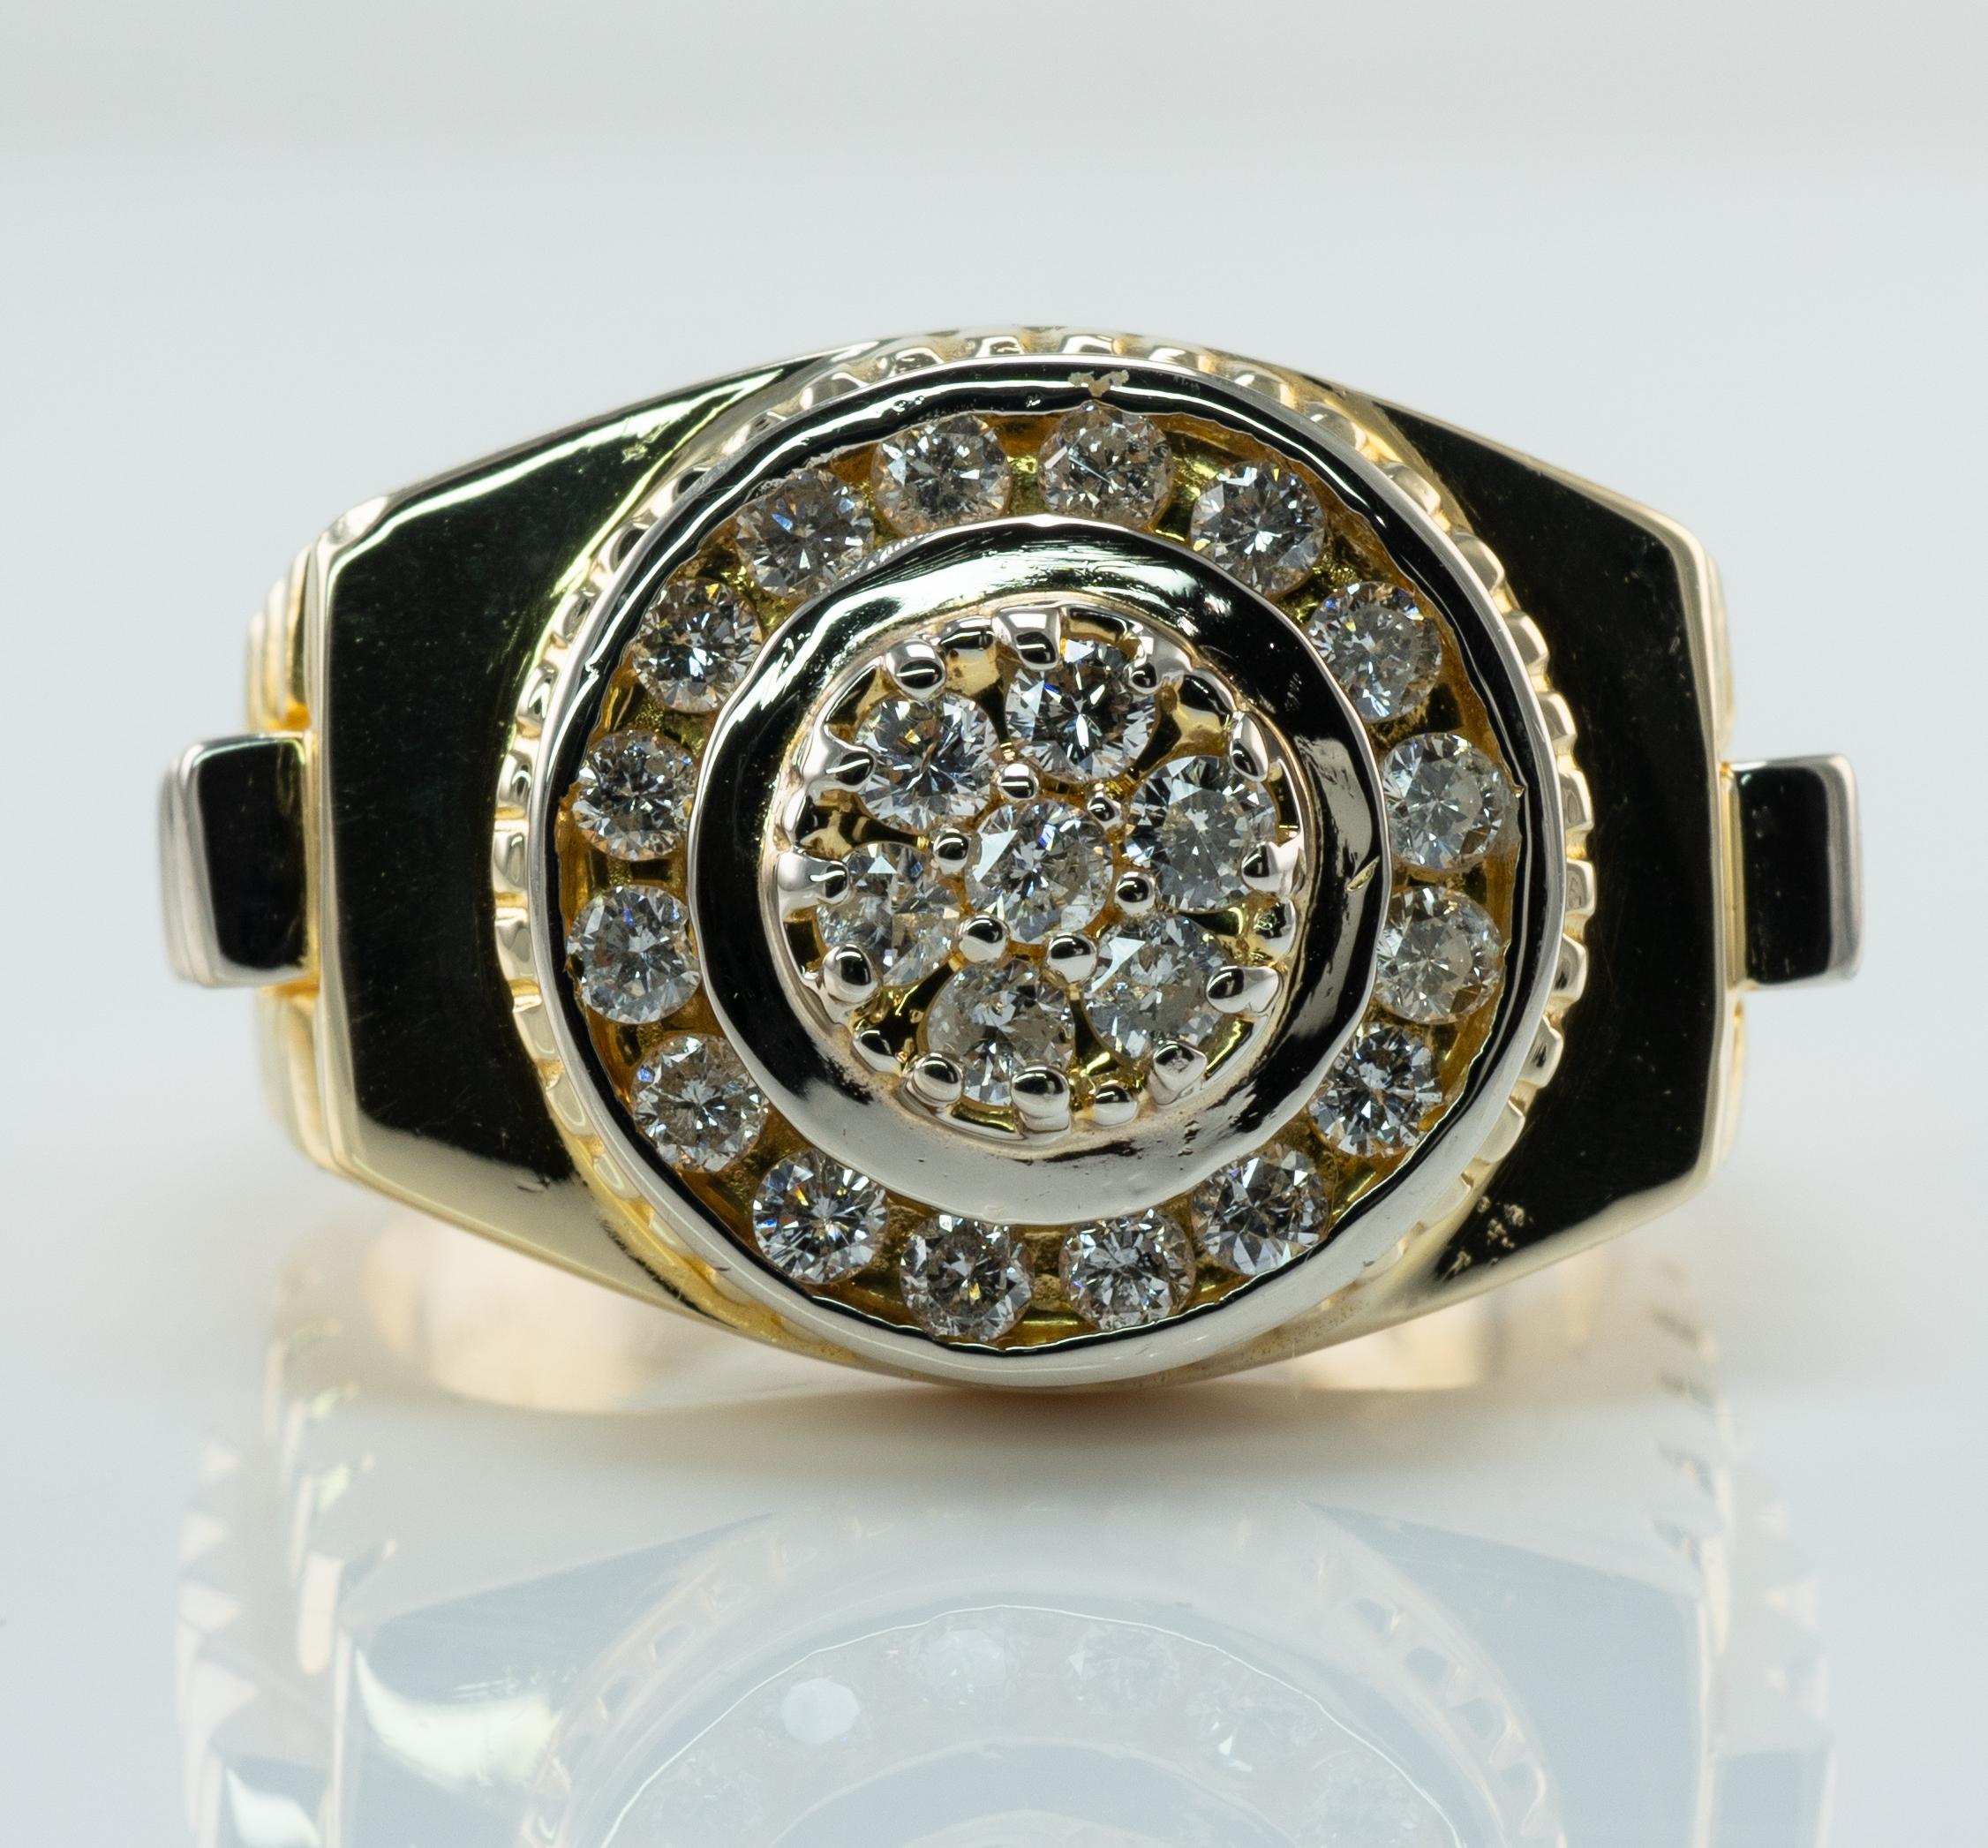 1.50 Carat Men Round Diamond Rolex Ring 18K Yellow Gold